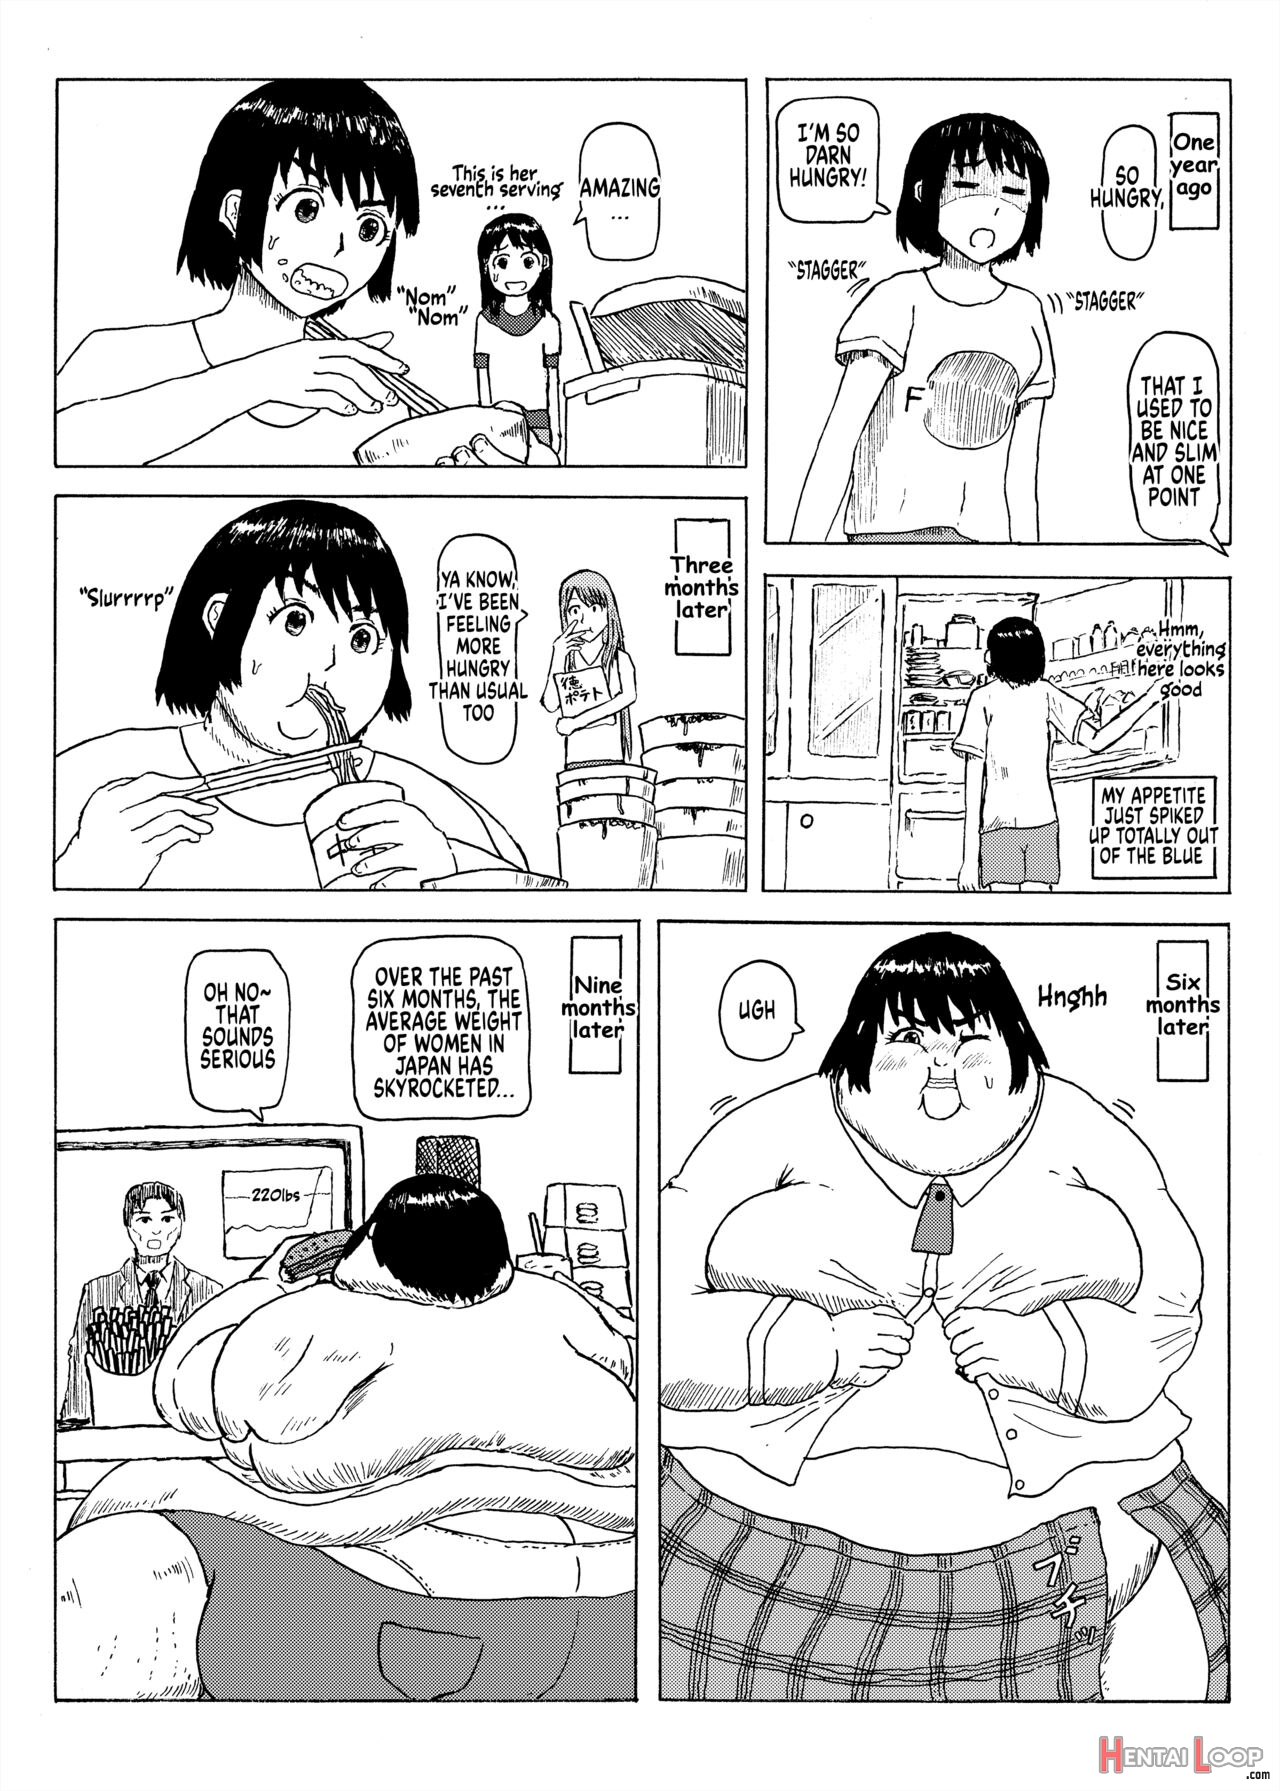 Fuuka, The Girl Who Reeks Of Sweat - English page 4